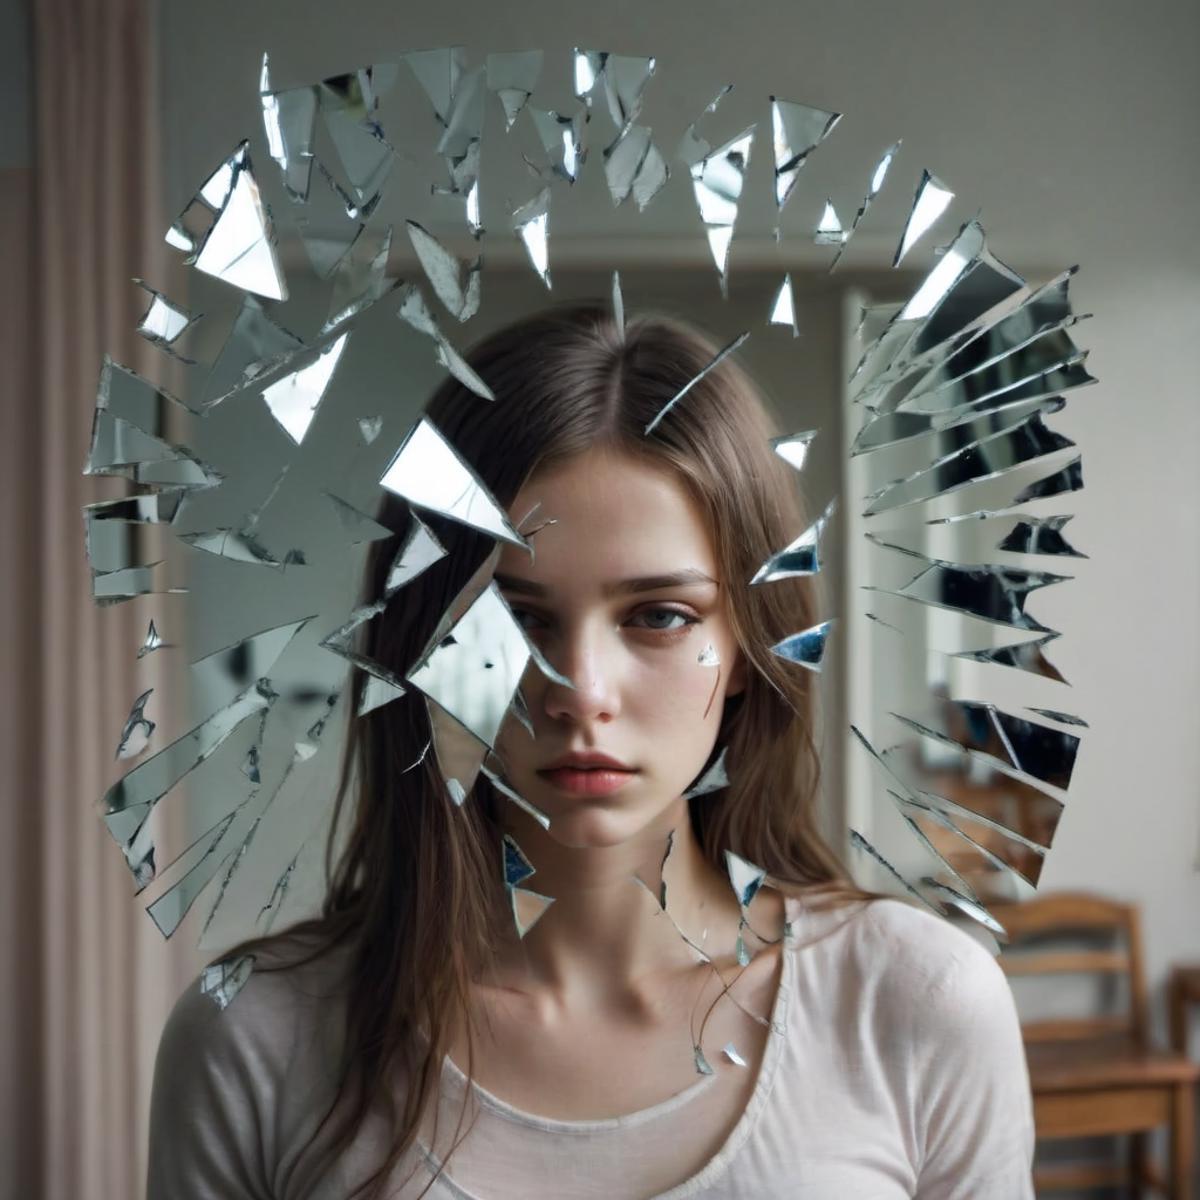 broken mirror shards reflecting a beautiful girl